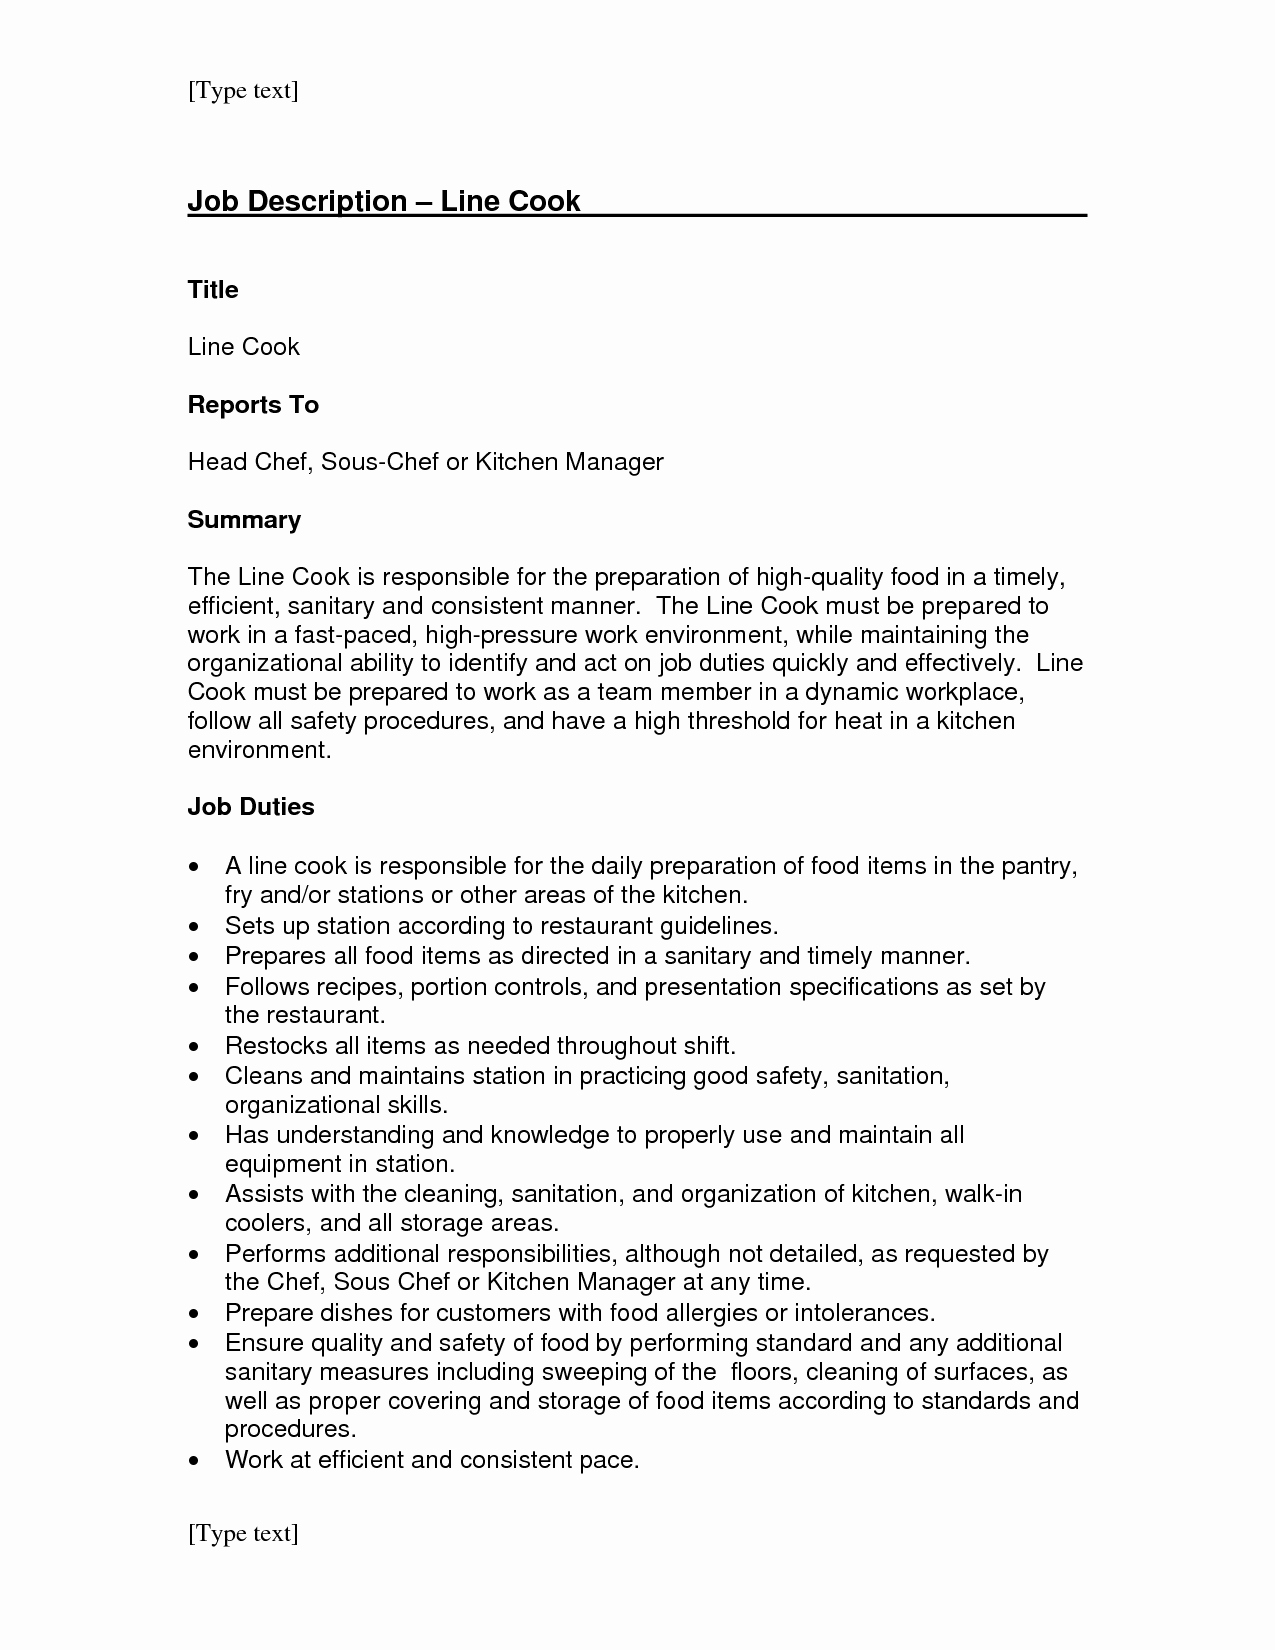 Line Cook Job Description for Resume Sidemcicek